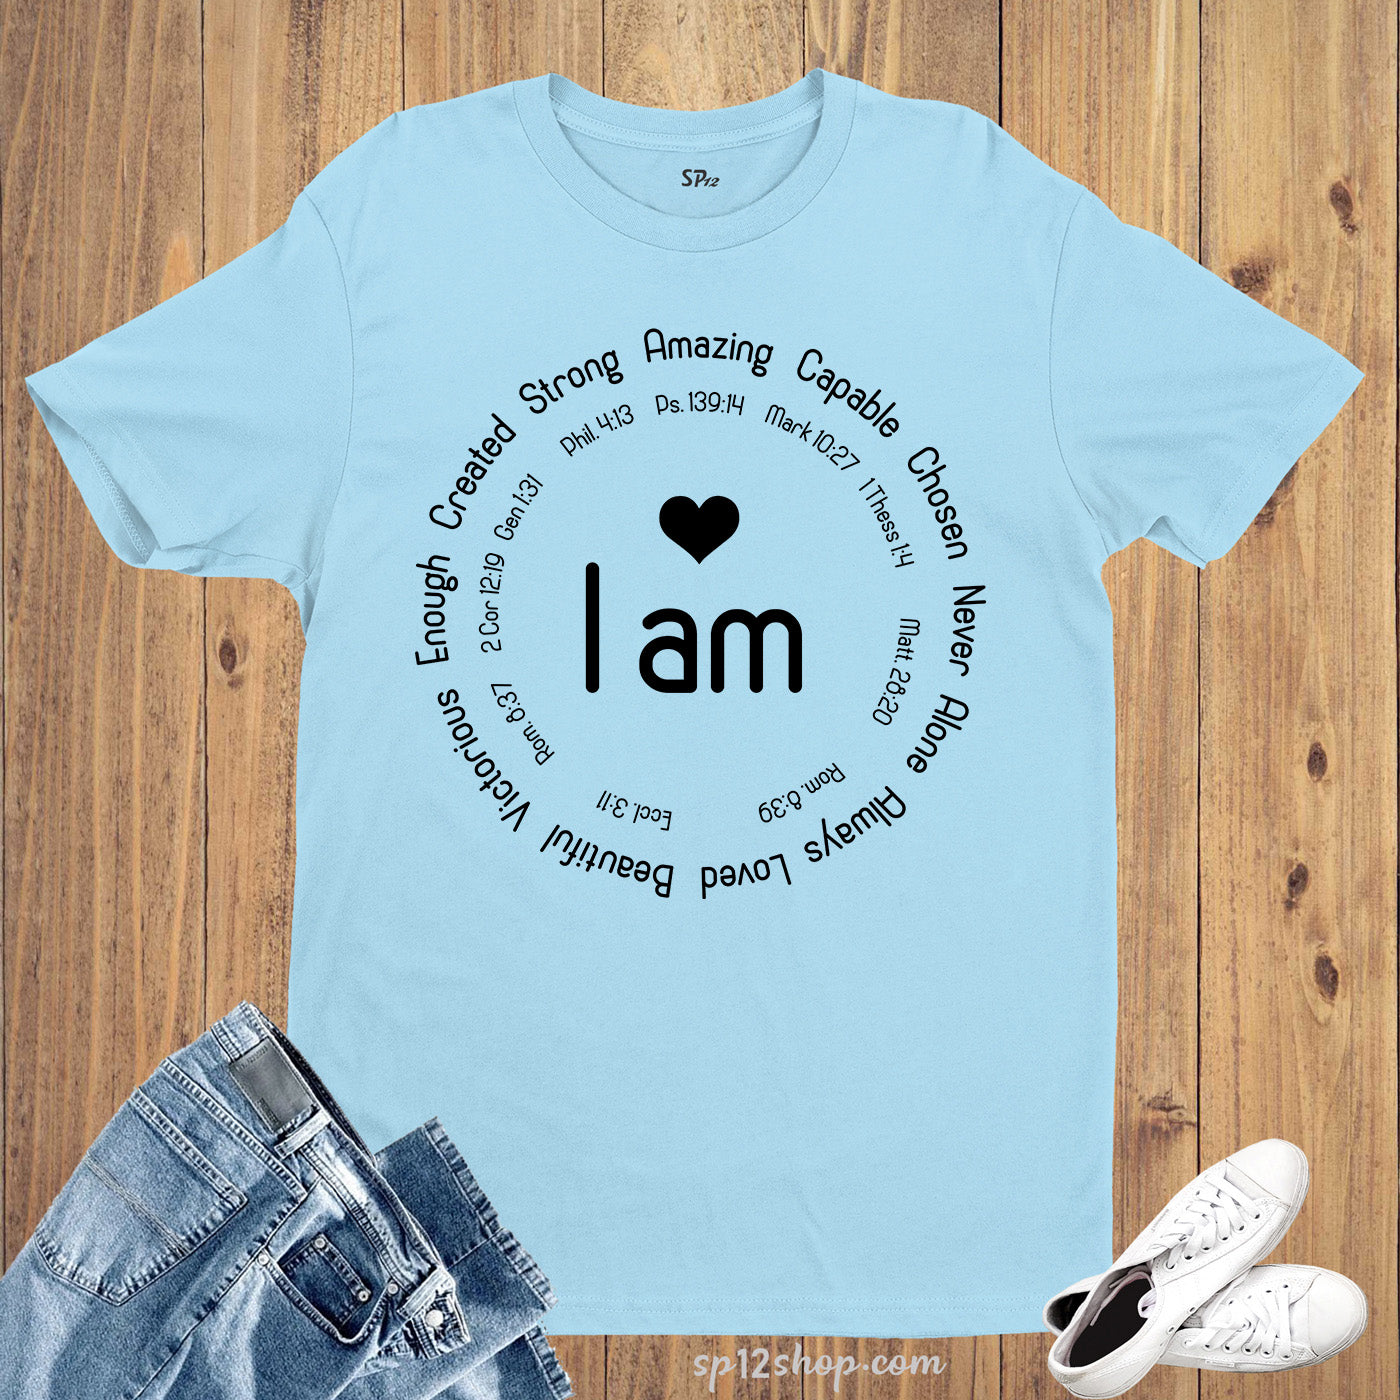 I'am Inspiration I'am Enough You Are Inspiration, Motivational T-shirt